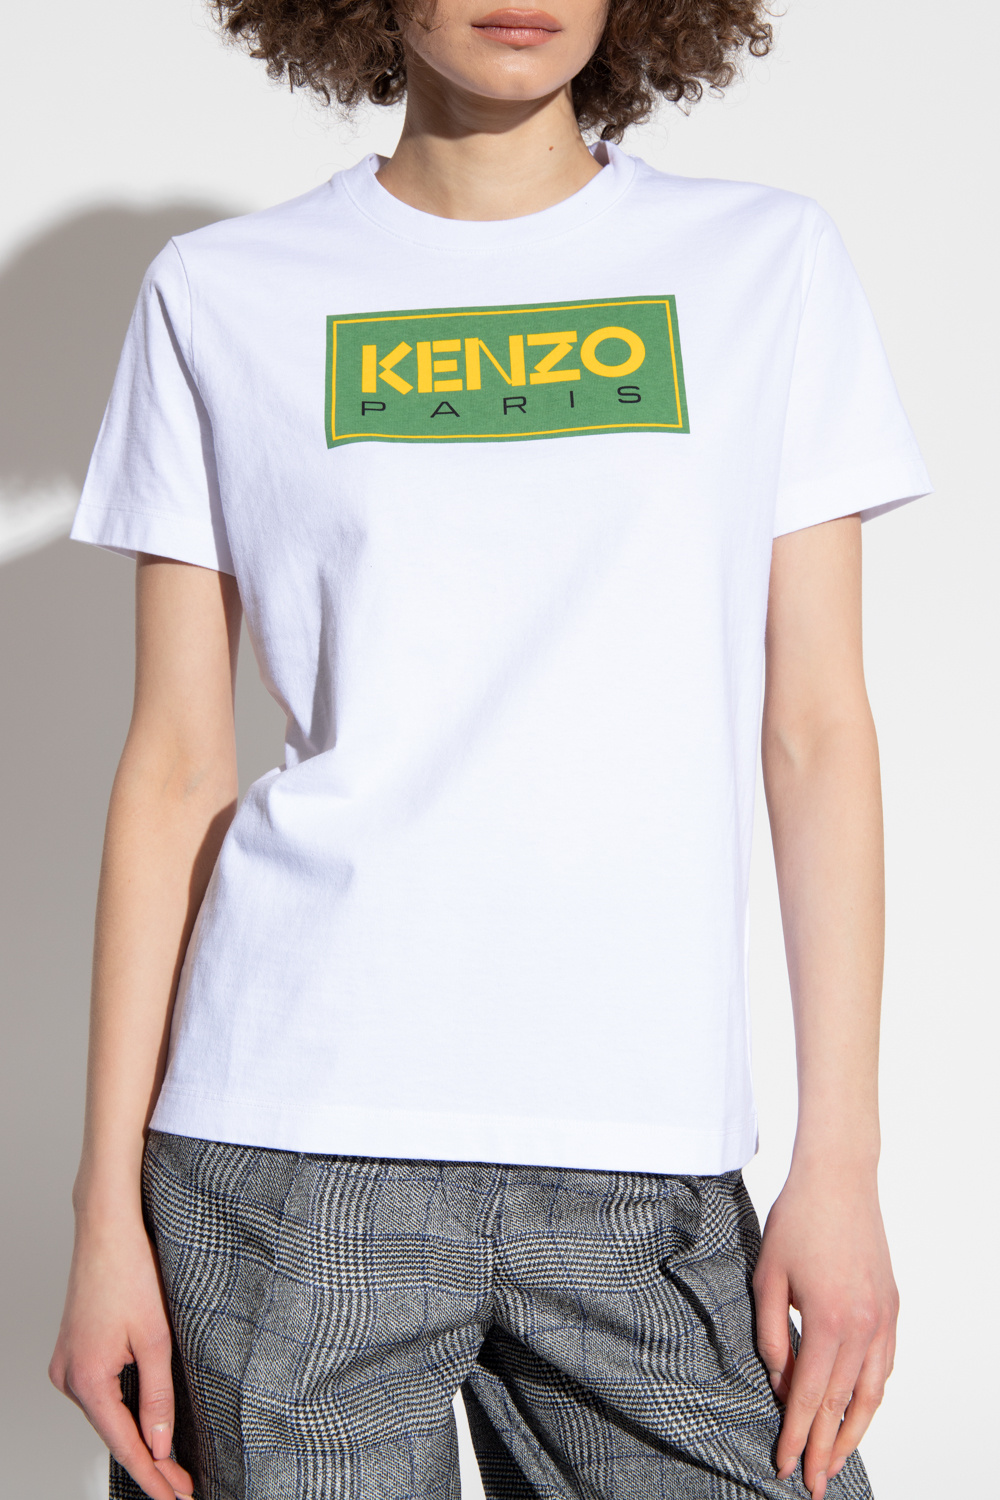 Kenzo Pierantoniogaspari Jackets for Women